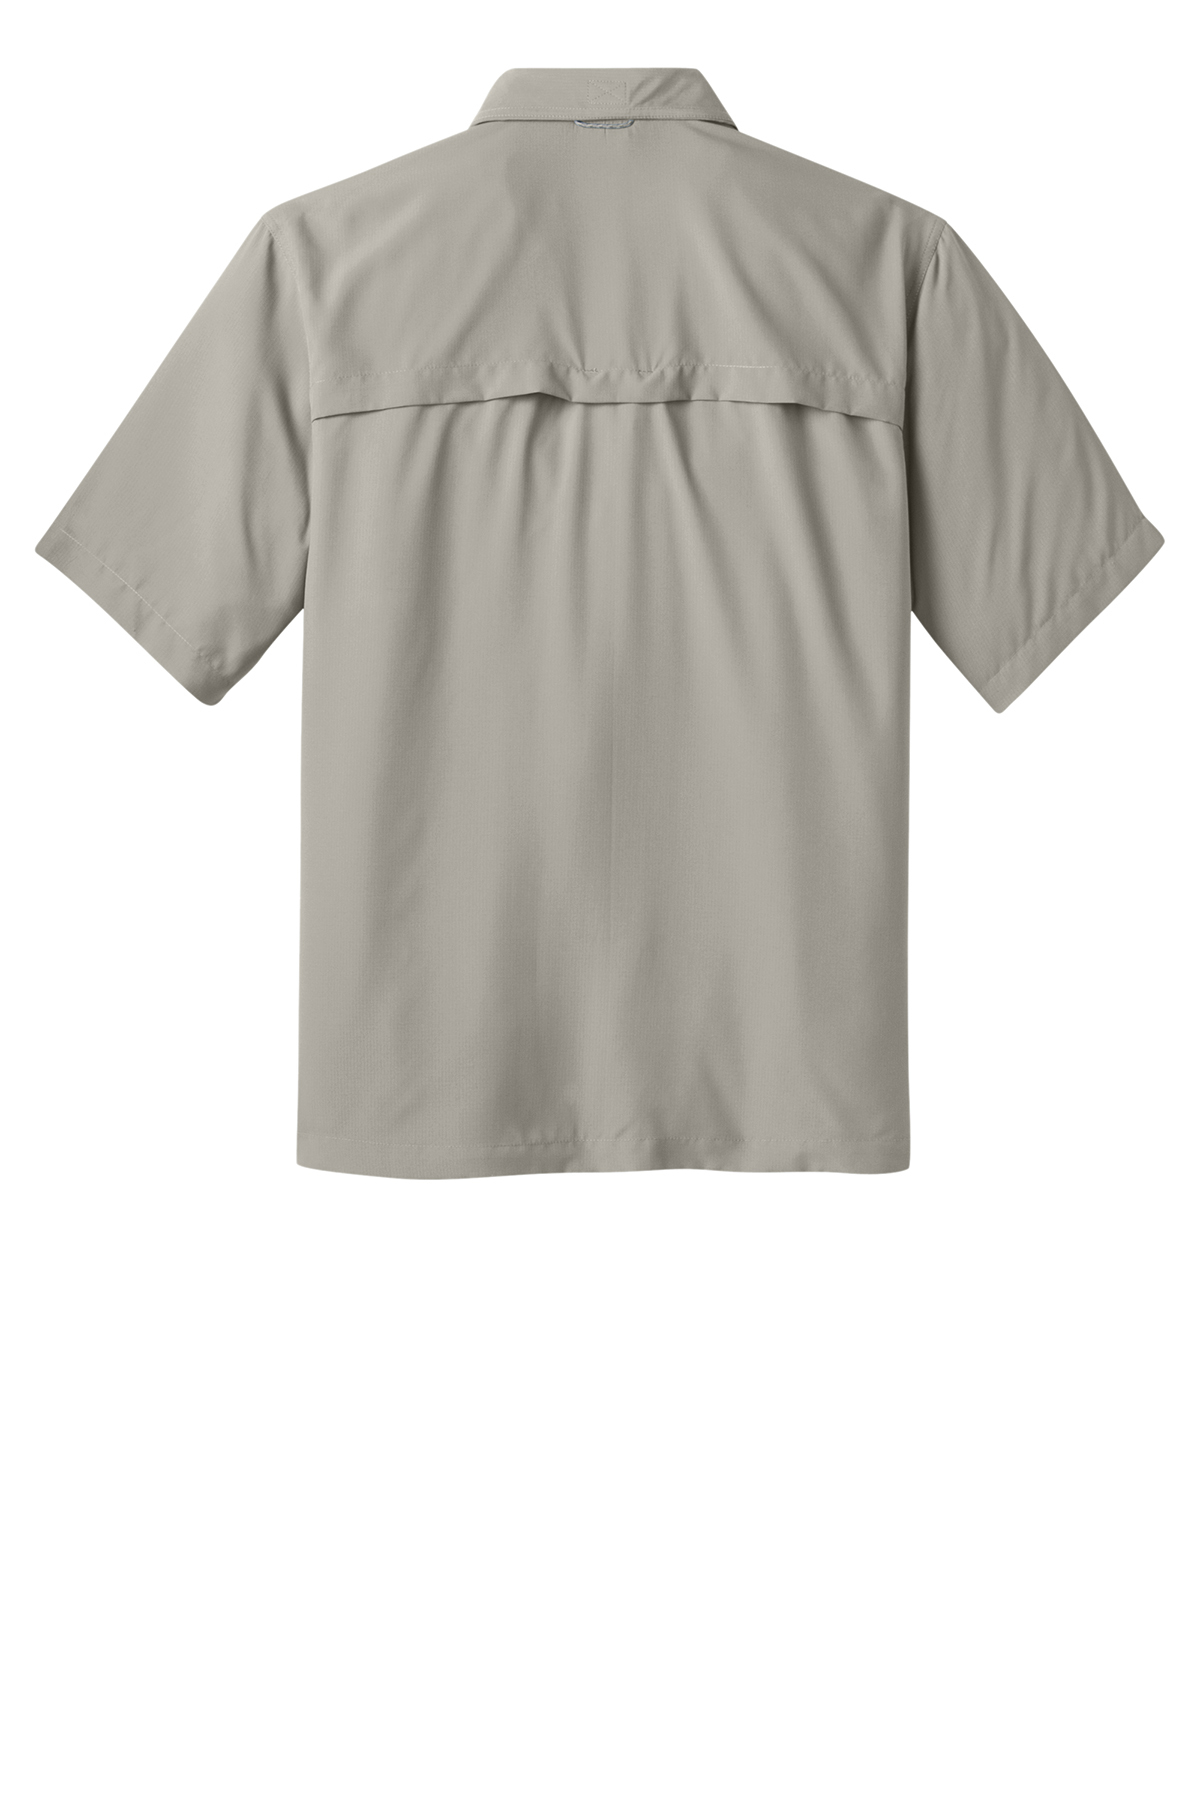 Eddie Bauer EB602 Short Sleeve Performance Fishing Shirt